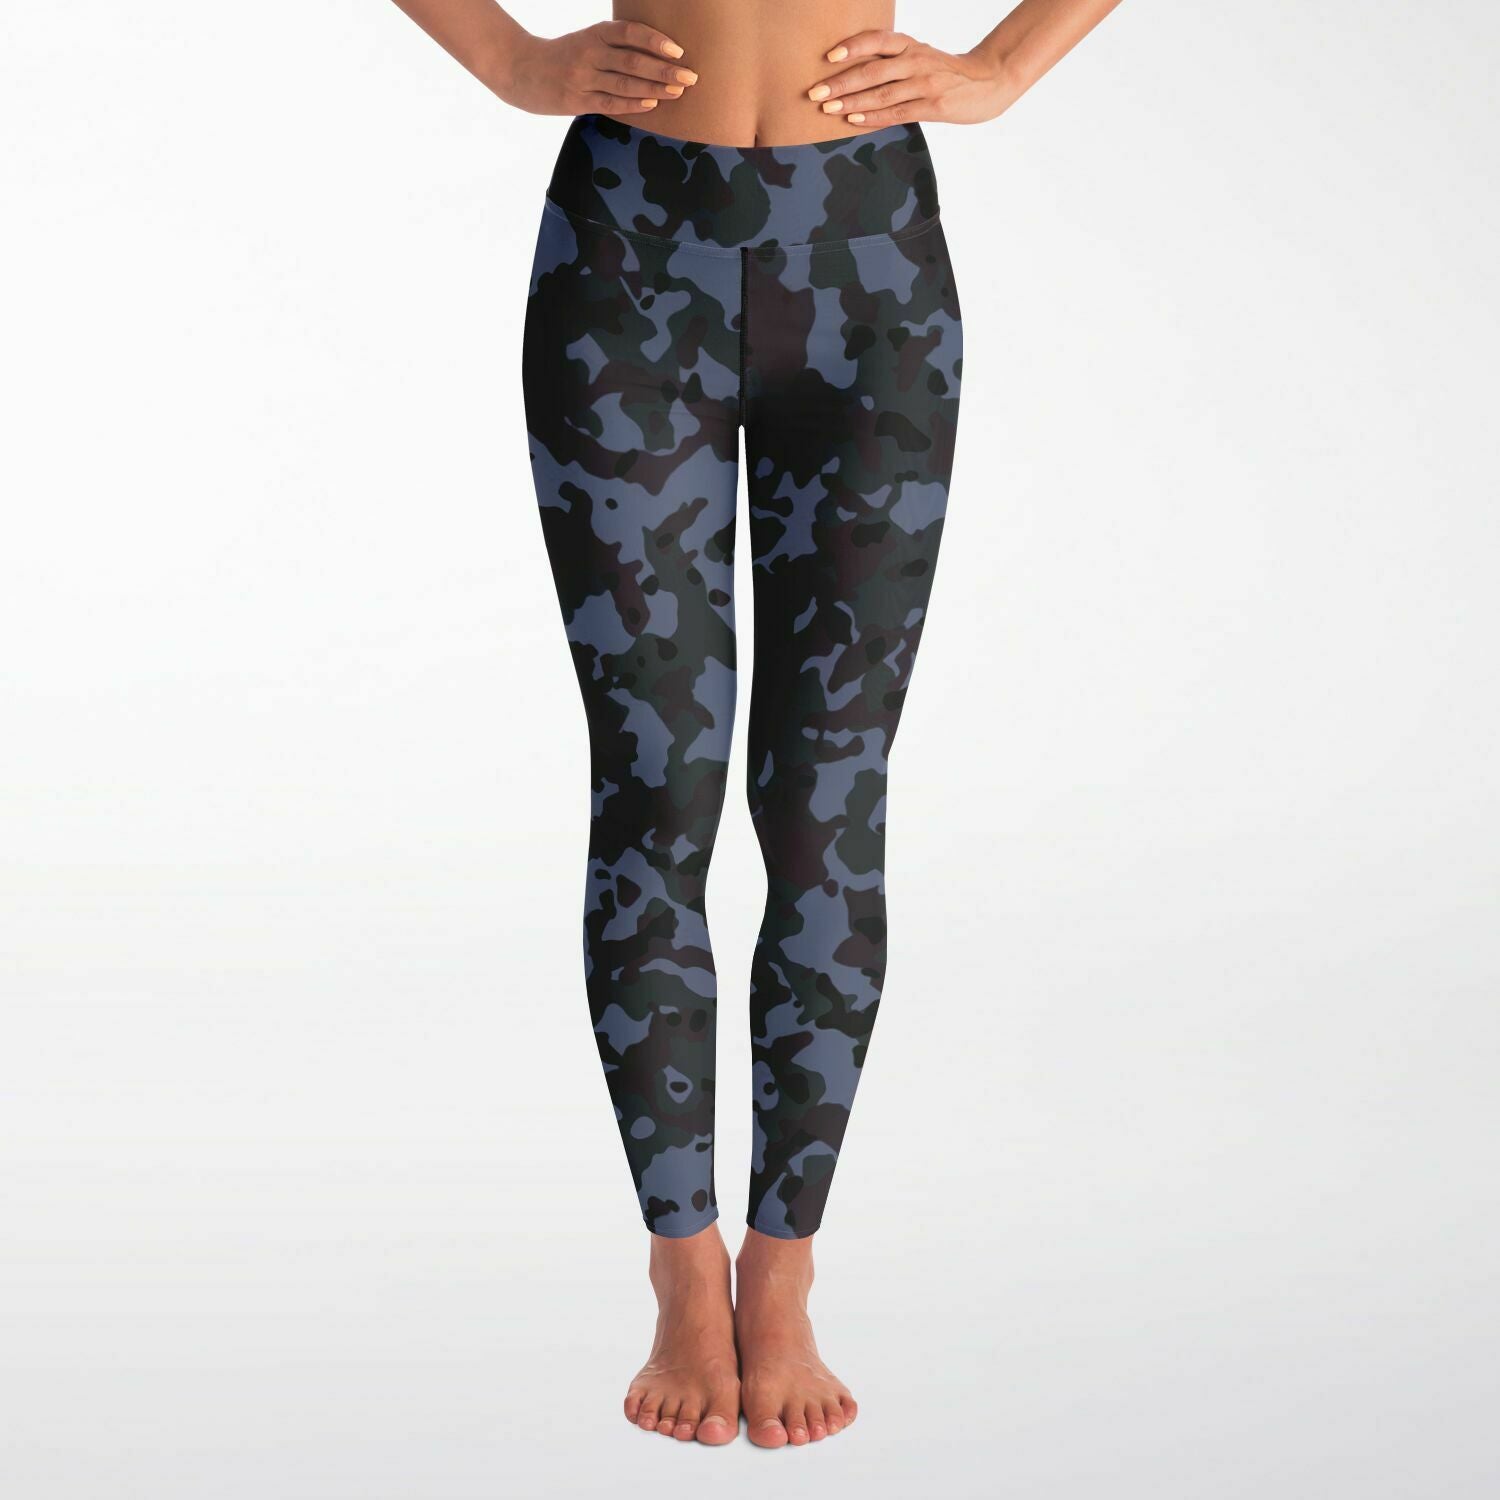 Blue Camo Leggings, Yoga & Workout Leggings with Pocket